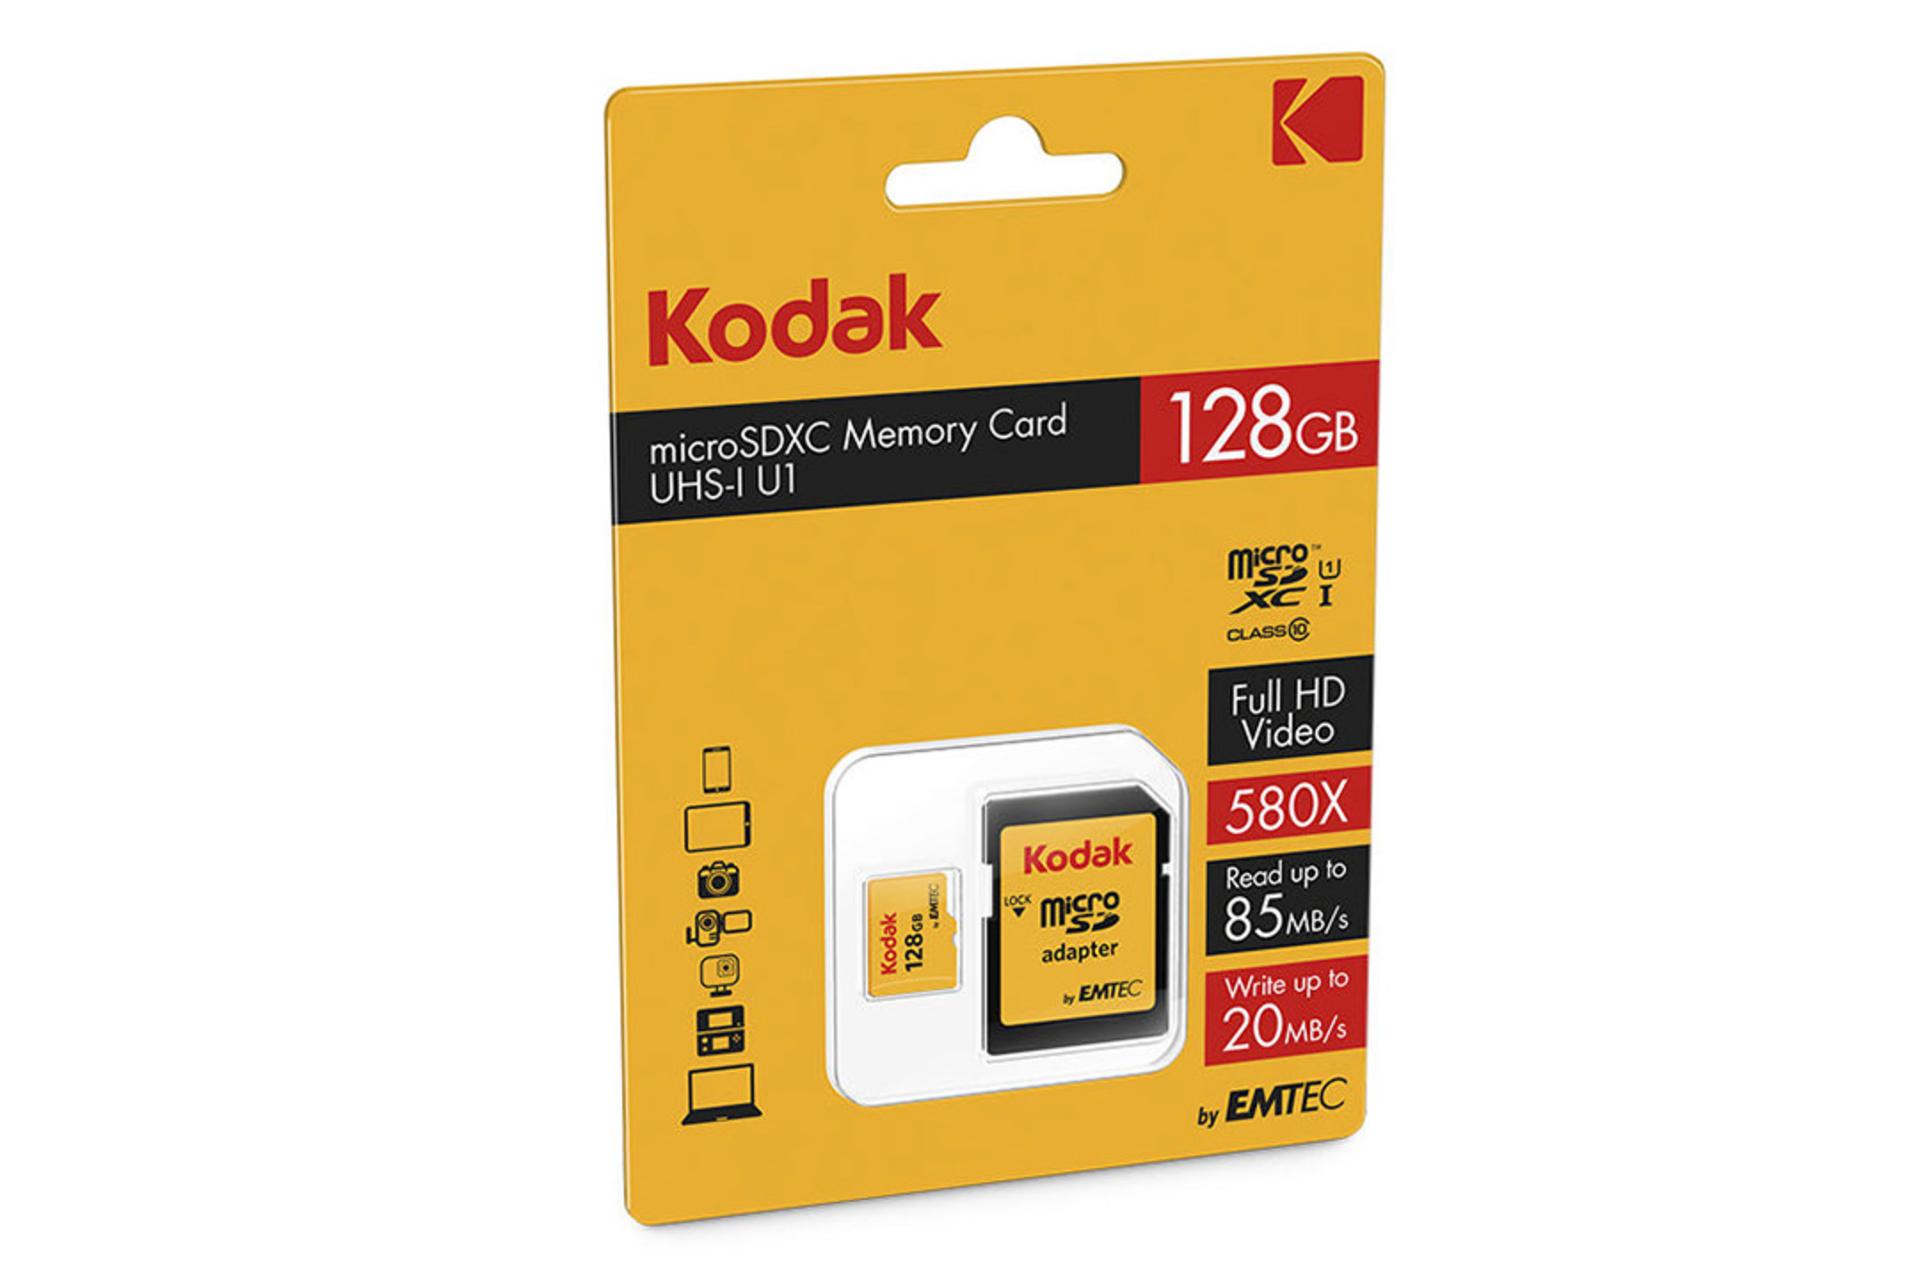 Kodak UHS-I U1 microSDXC Class 10 UHS-U1 128GB